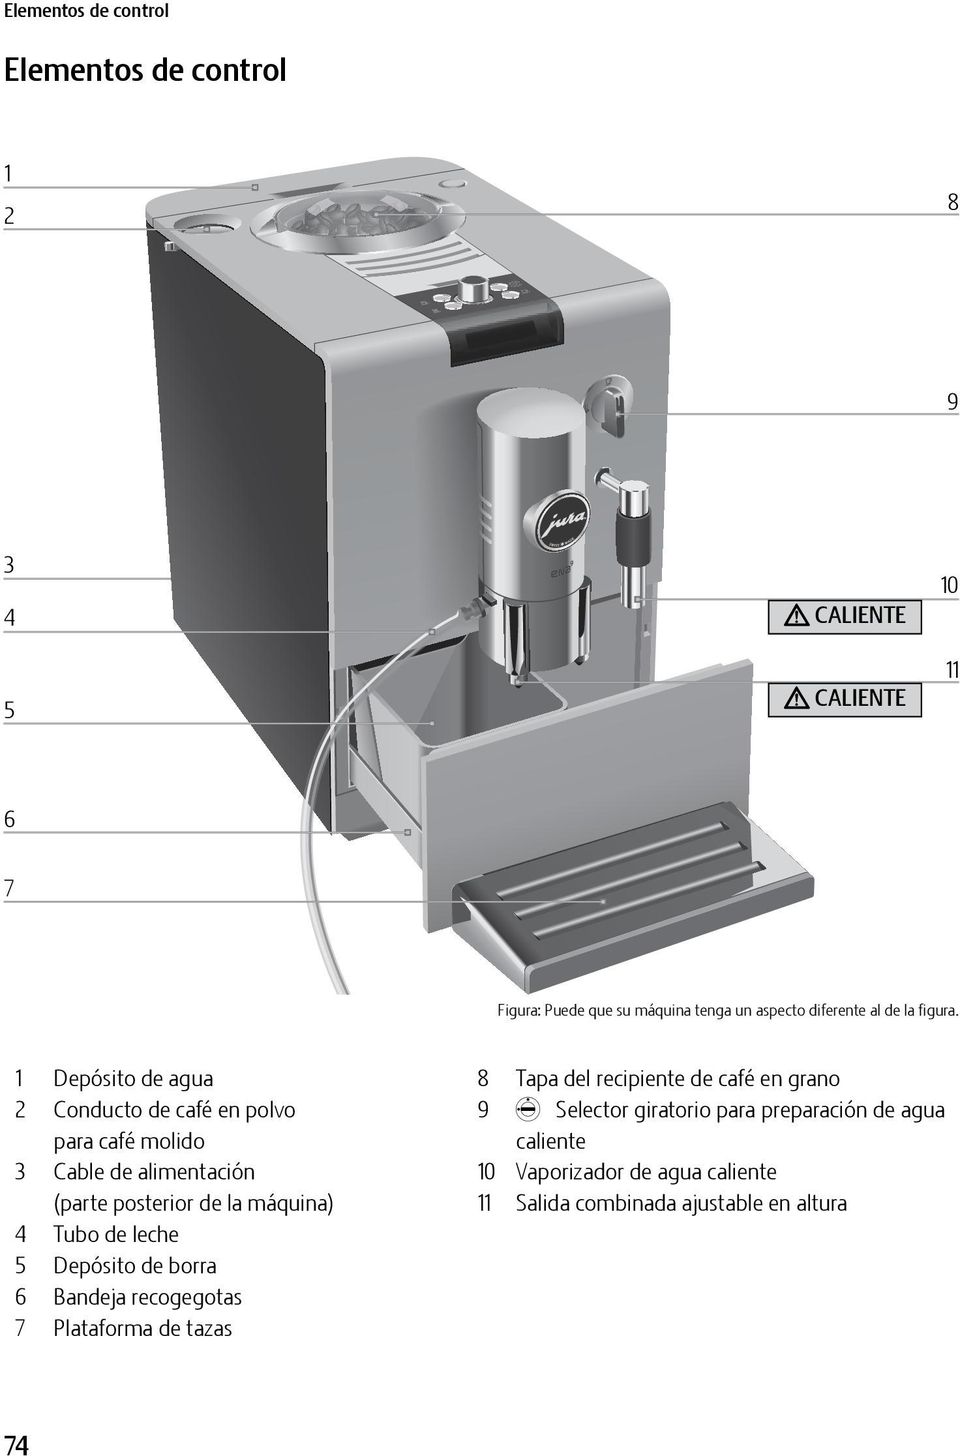 1 Depósito de agua 2 Conducto de café polvo para café molido 3 Cable de alimtación (parte posterior de la máquina) 4 Tubo de